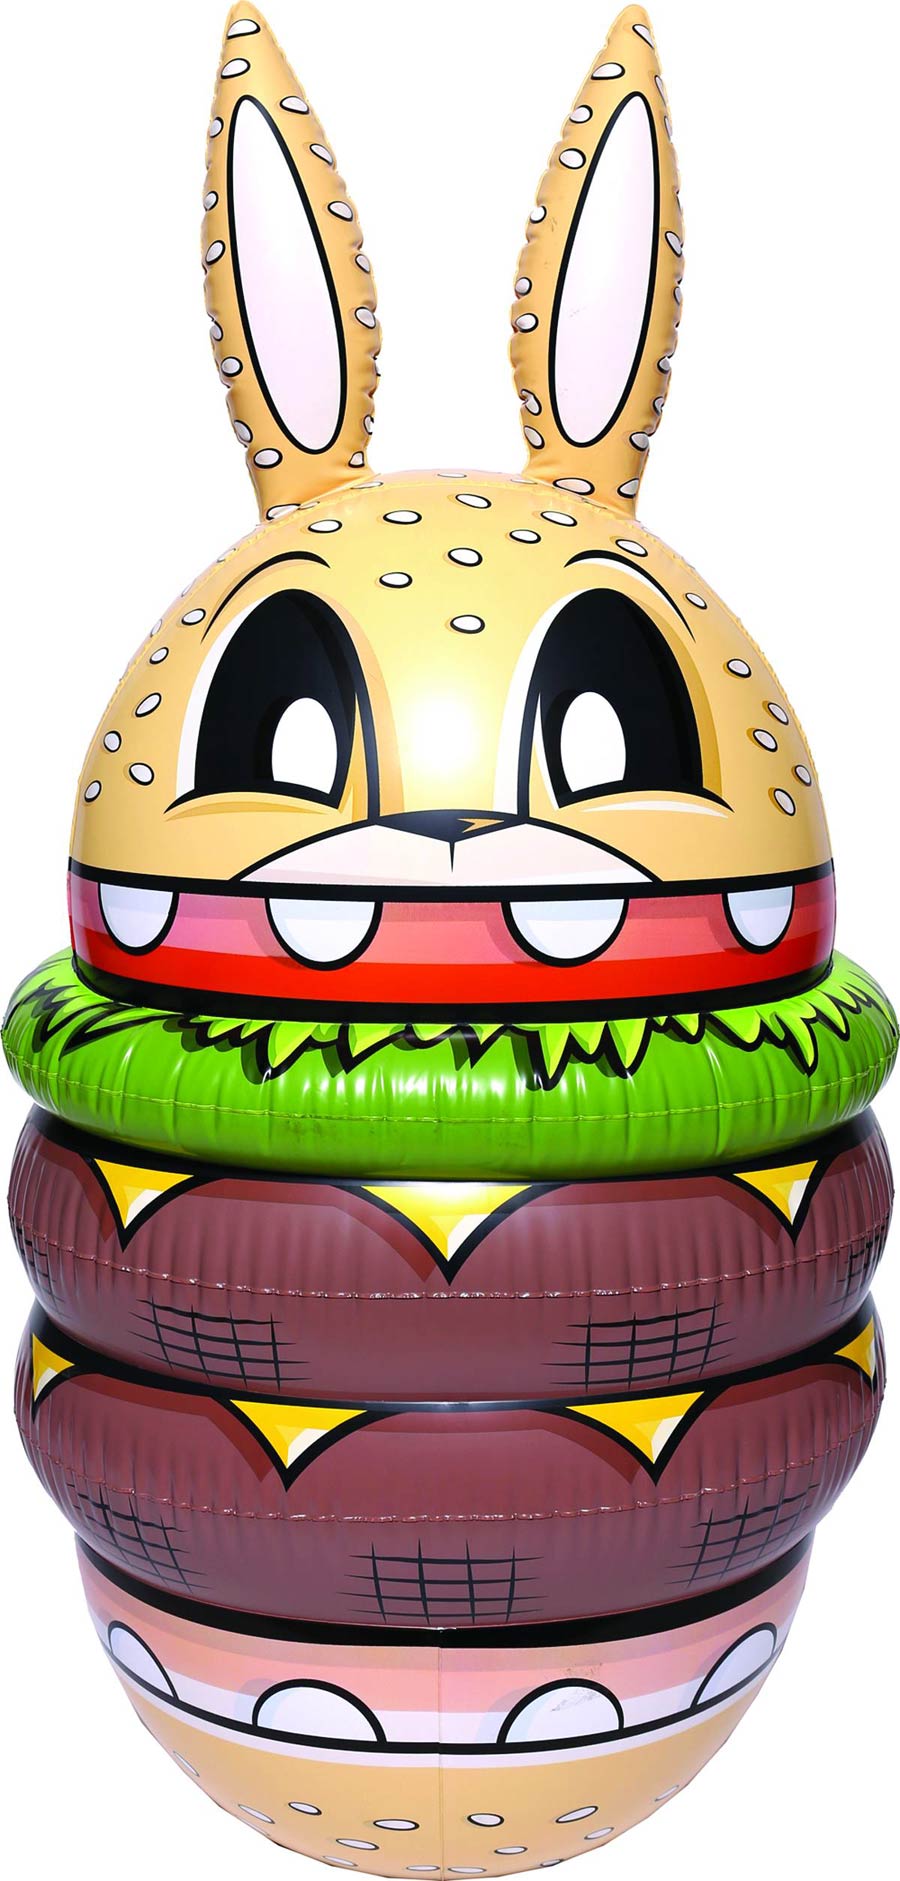 Chaos Bunnies Burger Bunny 62-Inch Inflatable